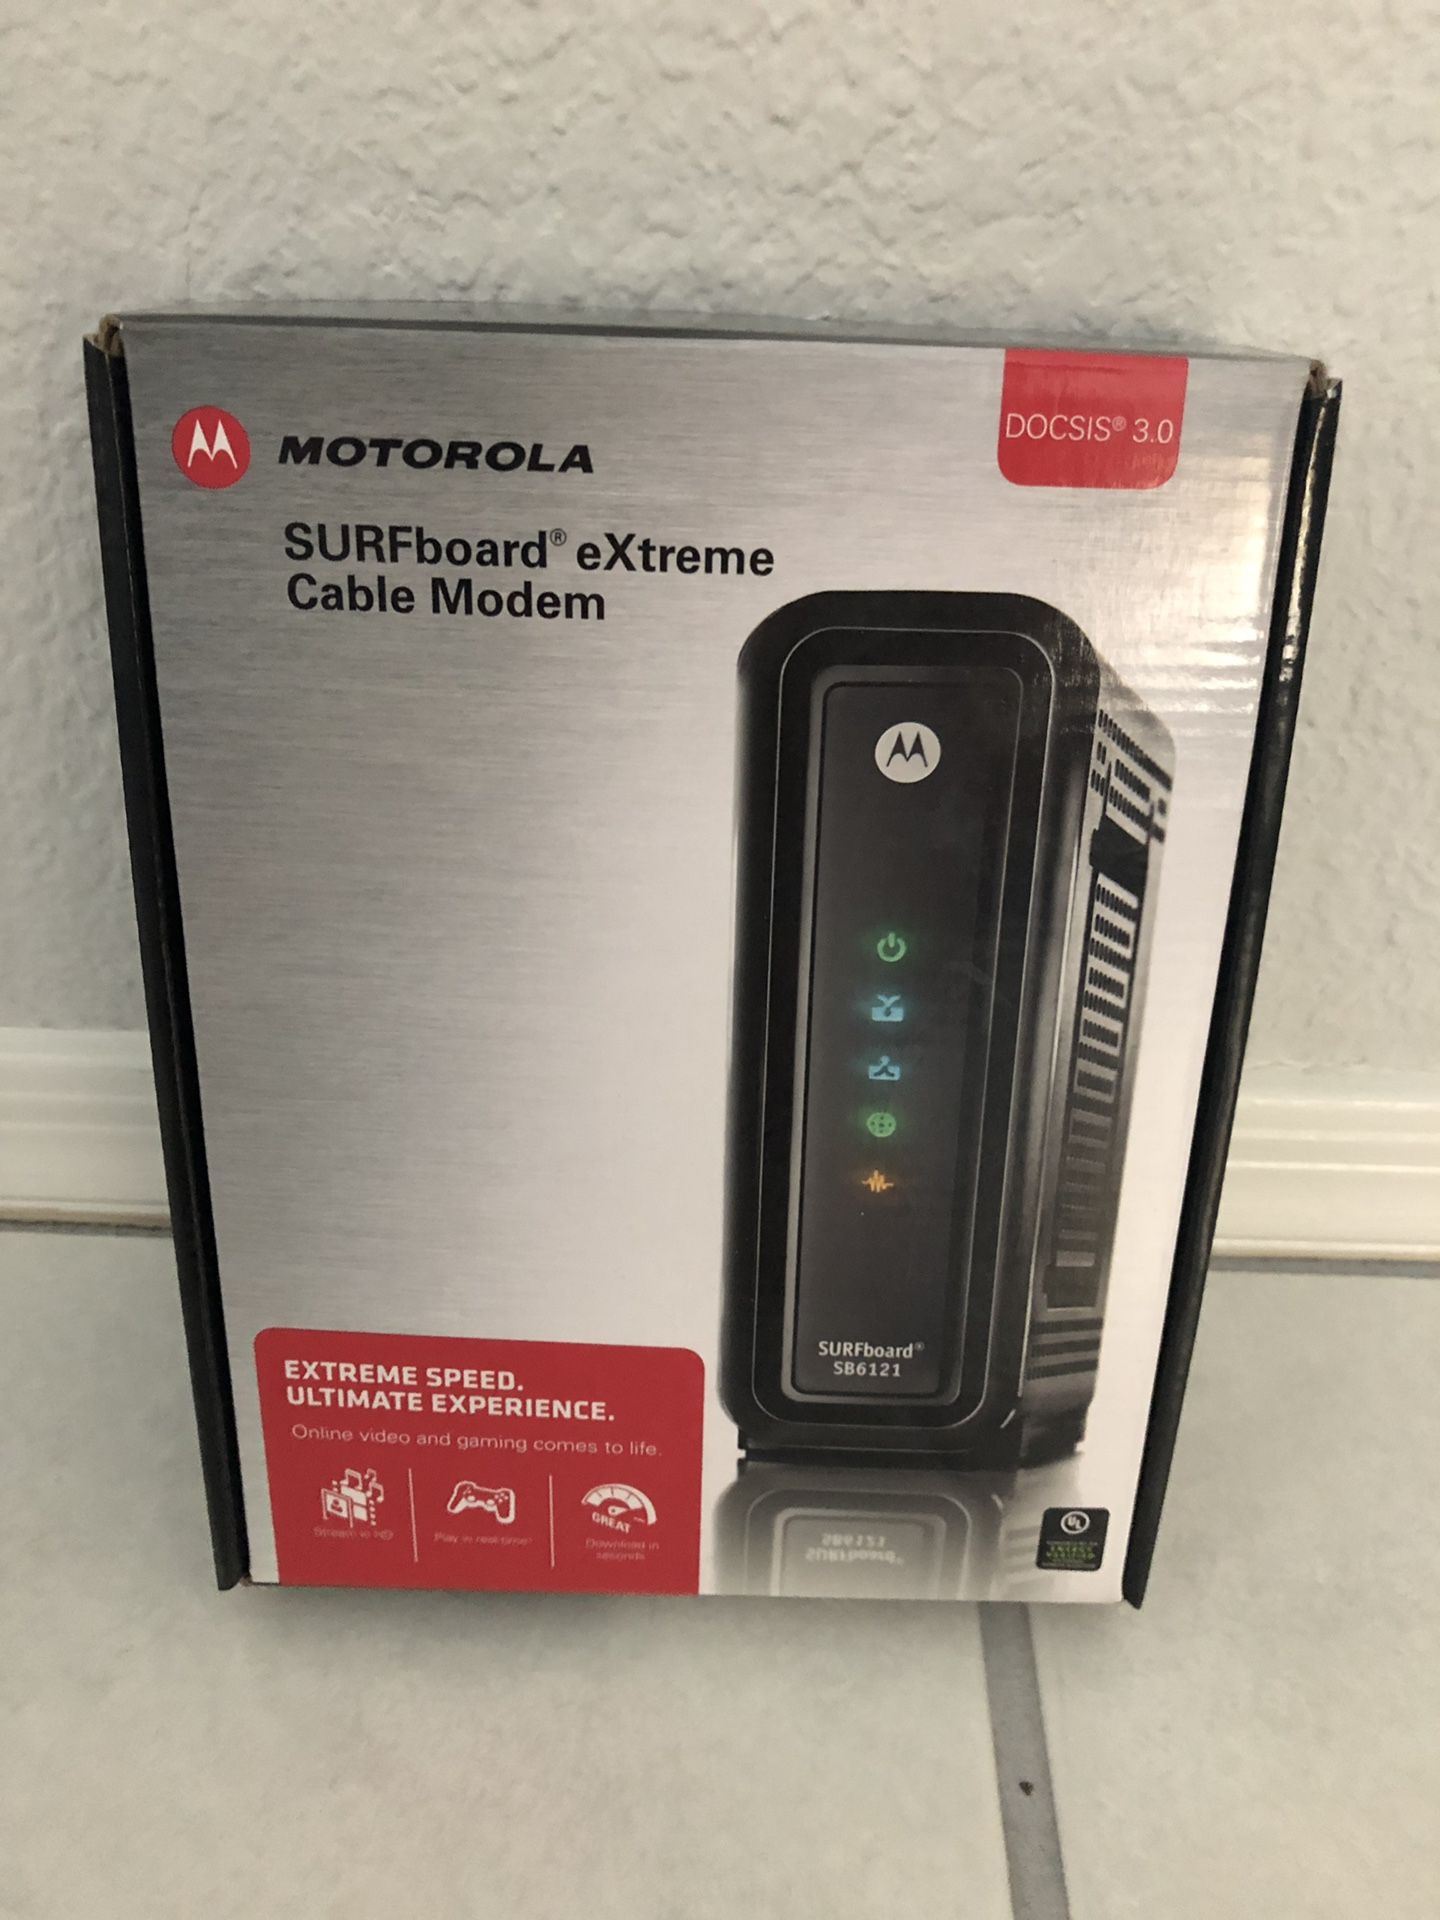 Motorola SURFboard eXtreme Cable Modem DOCSIS 3.0 SB6121